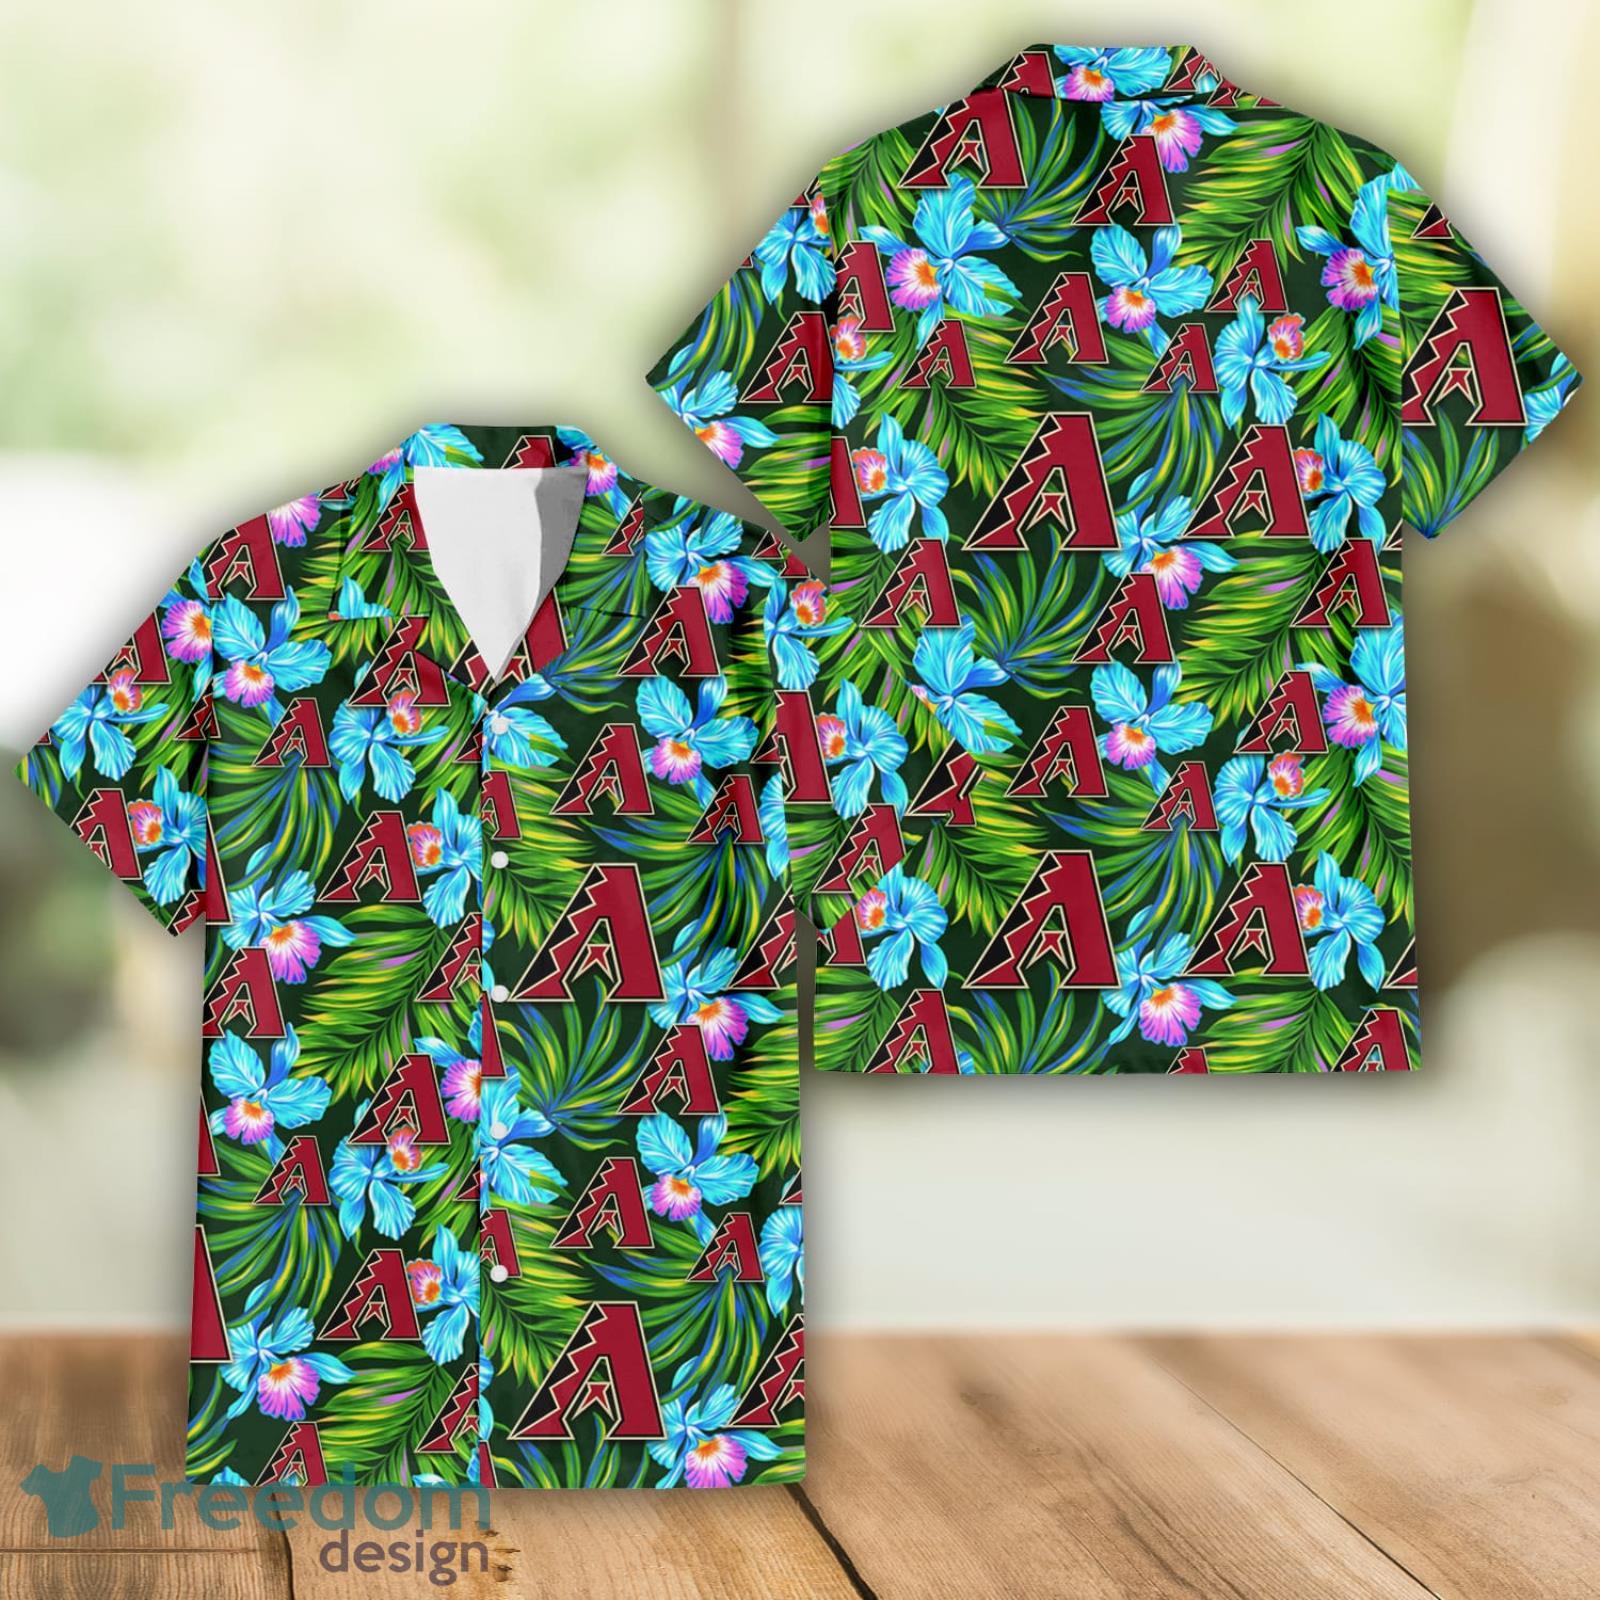 Arizona Diamondbacks Green Leaf Pattern Tropical Hawaiian Shirt For Men And  Women - Freedomdesign